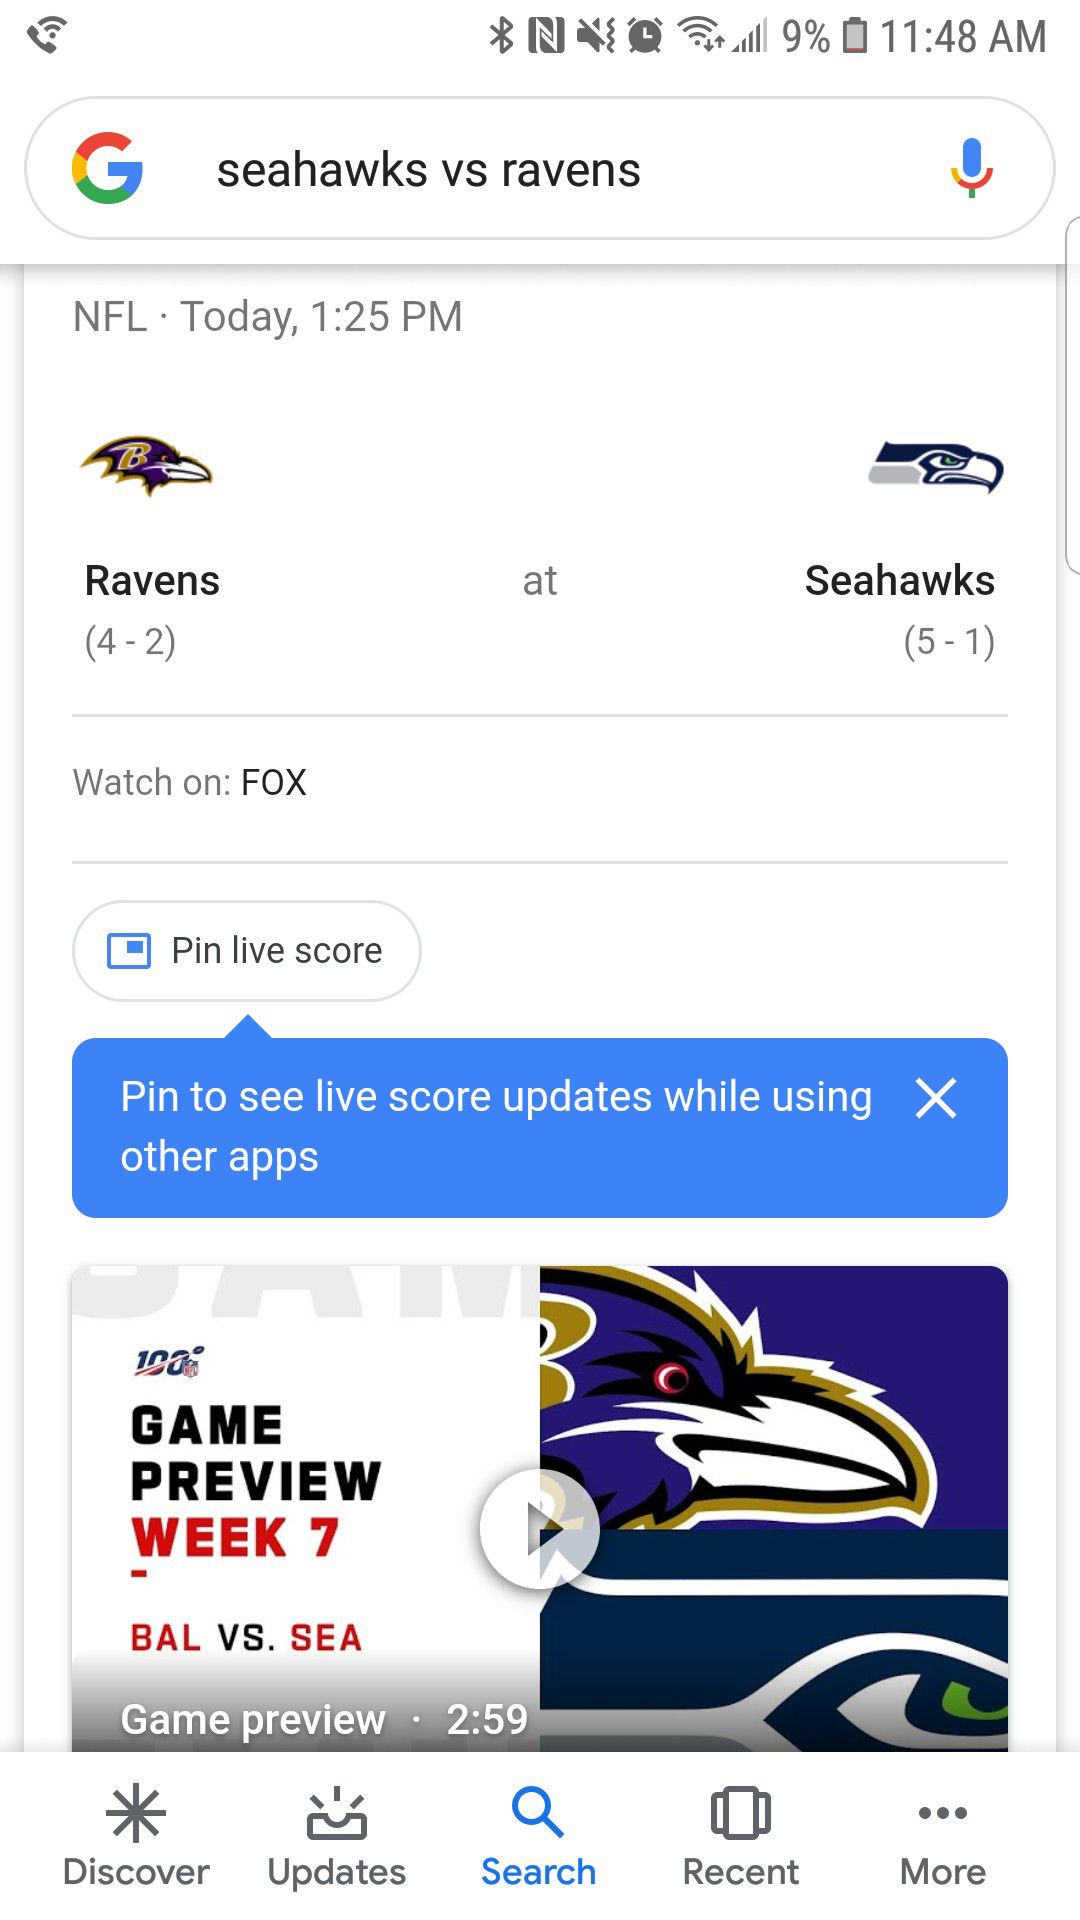 ***Wanted*** Seahawks vs Ravens last minute tickets 10/20/19